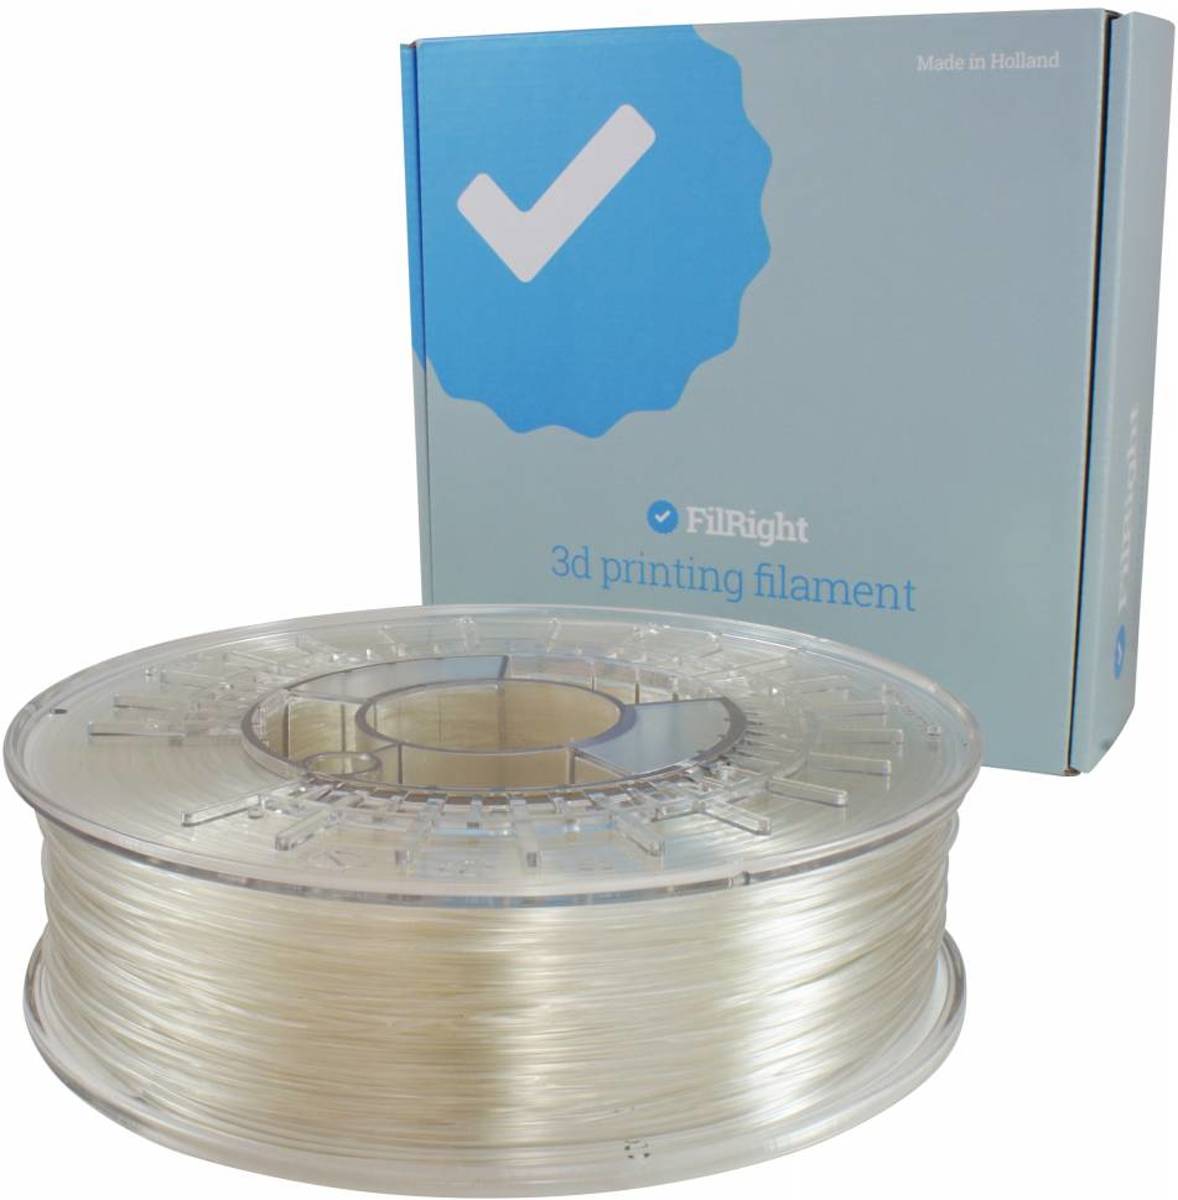 FilRight Pro PP PolyPropylene 2.85mm 3D Printer Filament 0,5kg Transparant